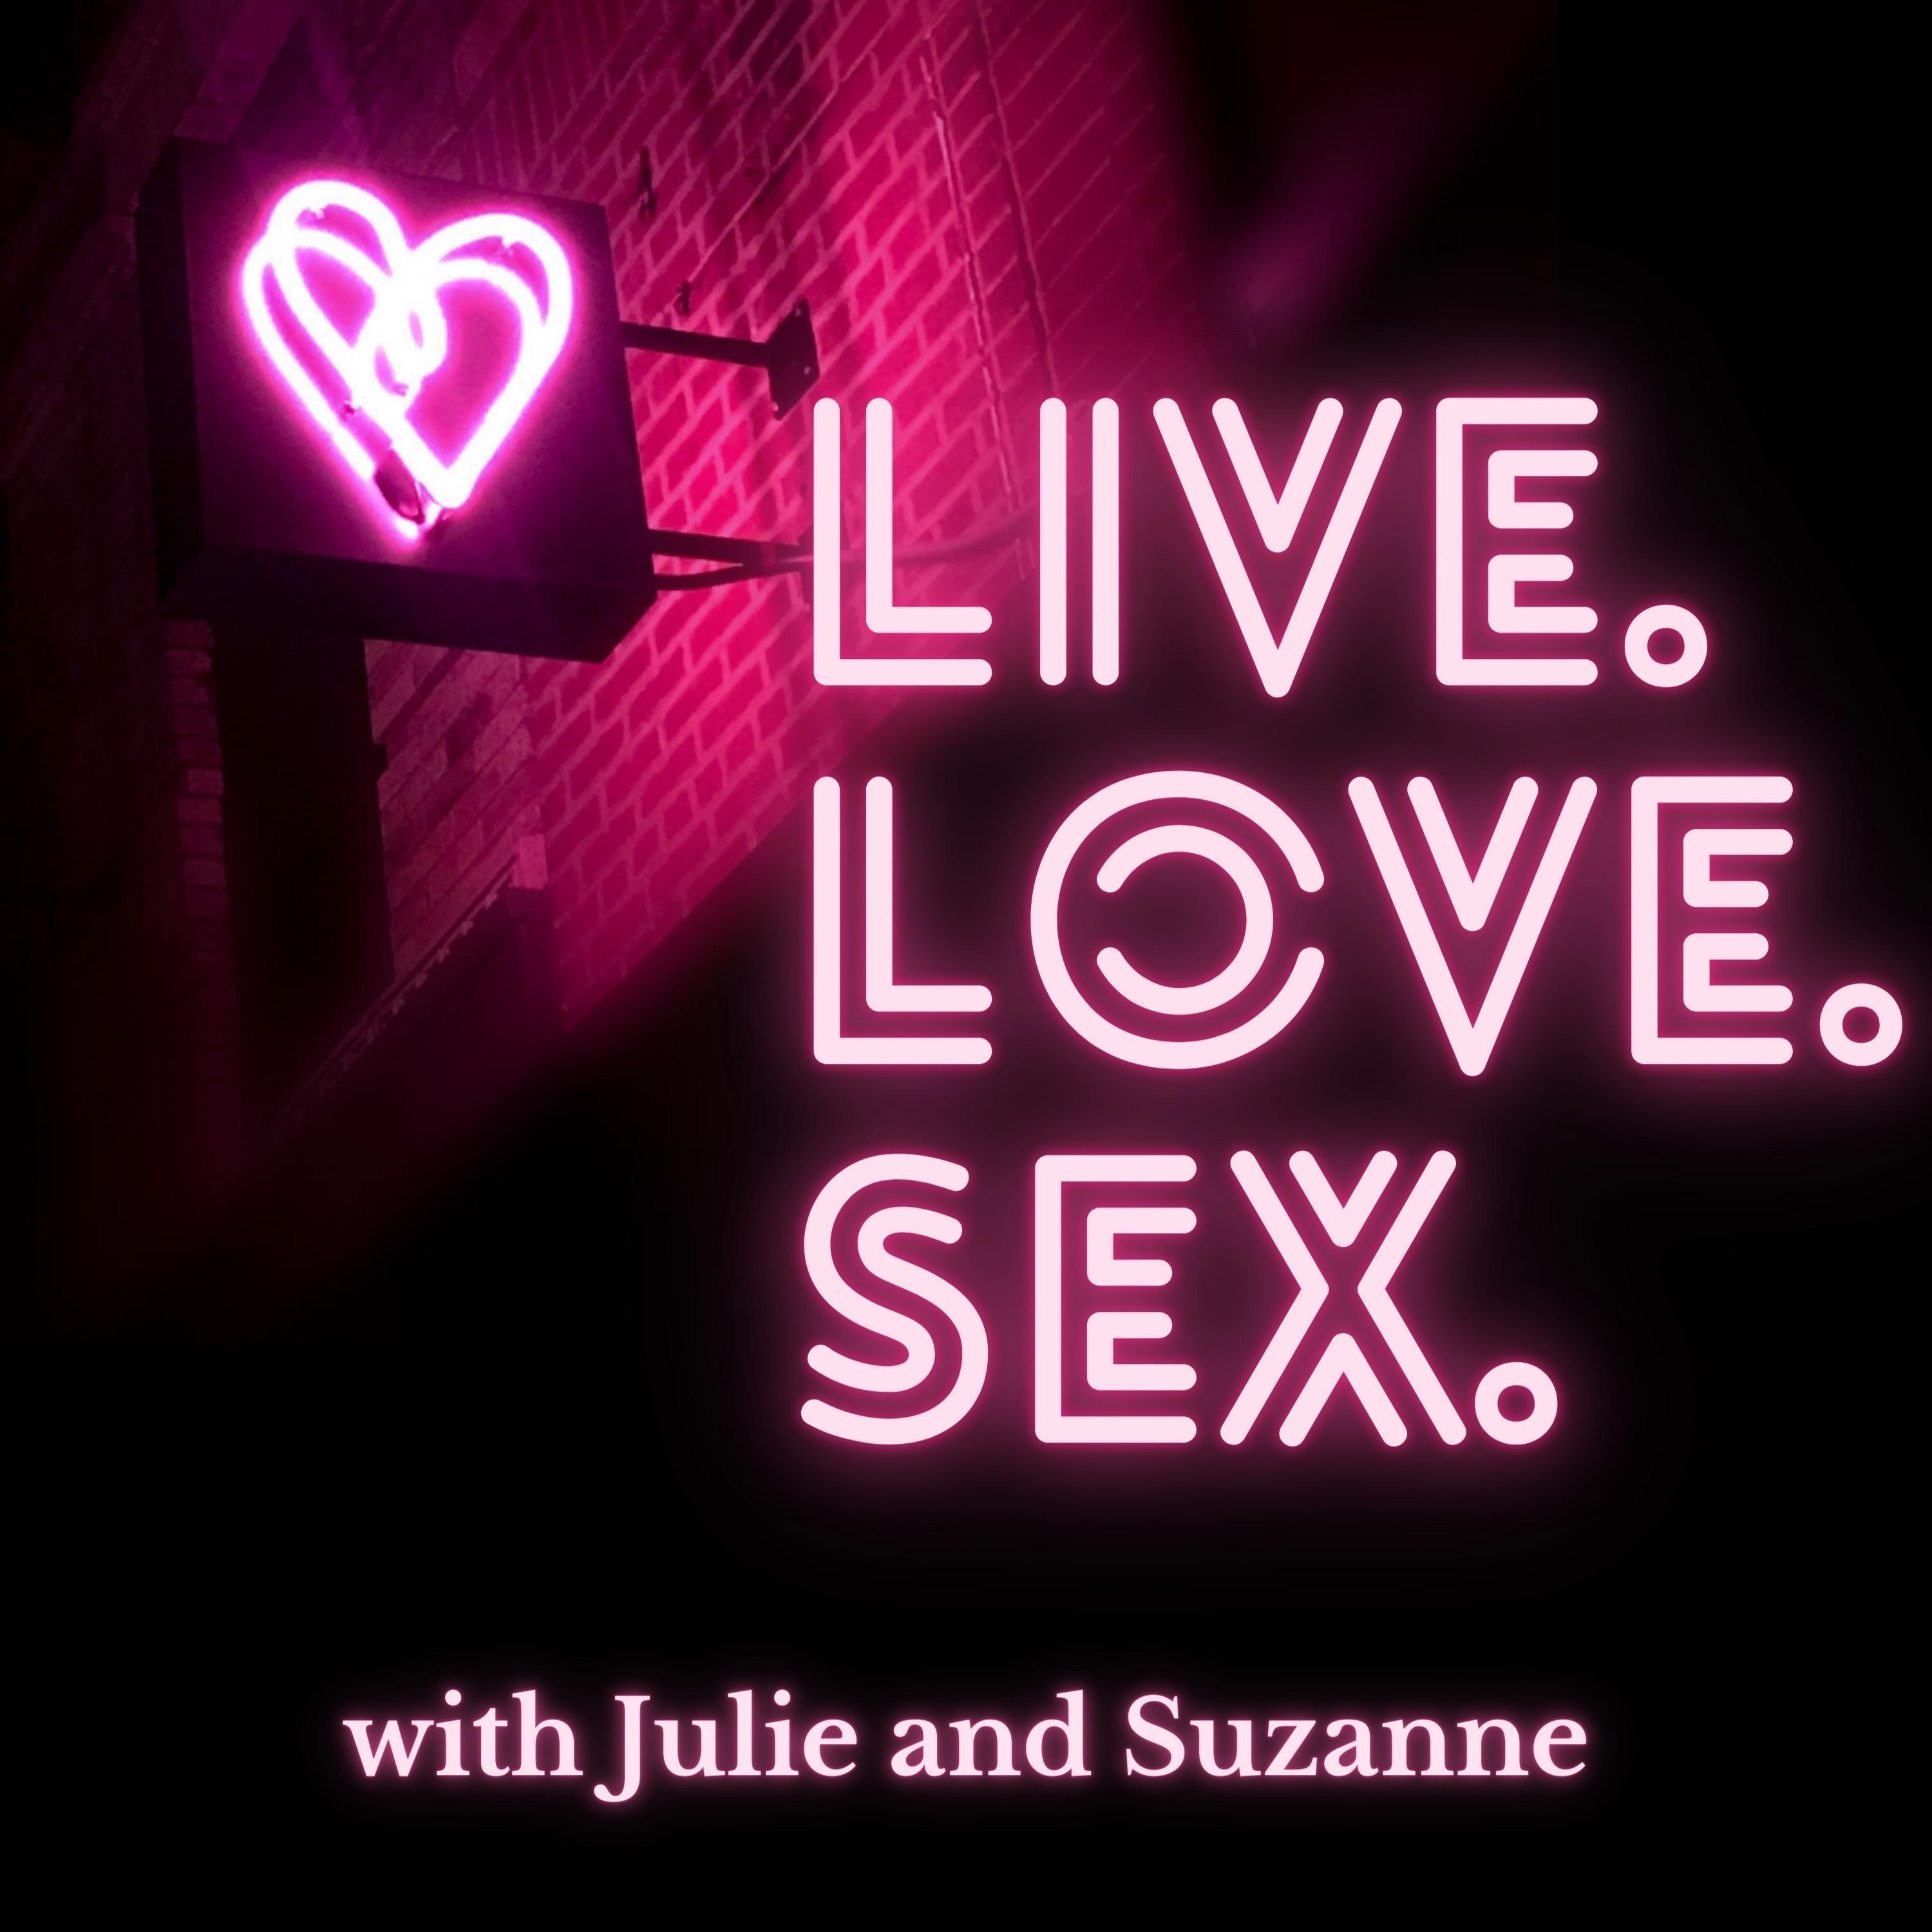 Live. Love. Sex.